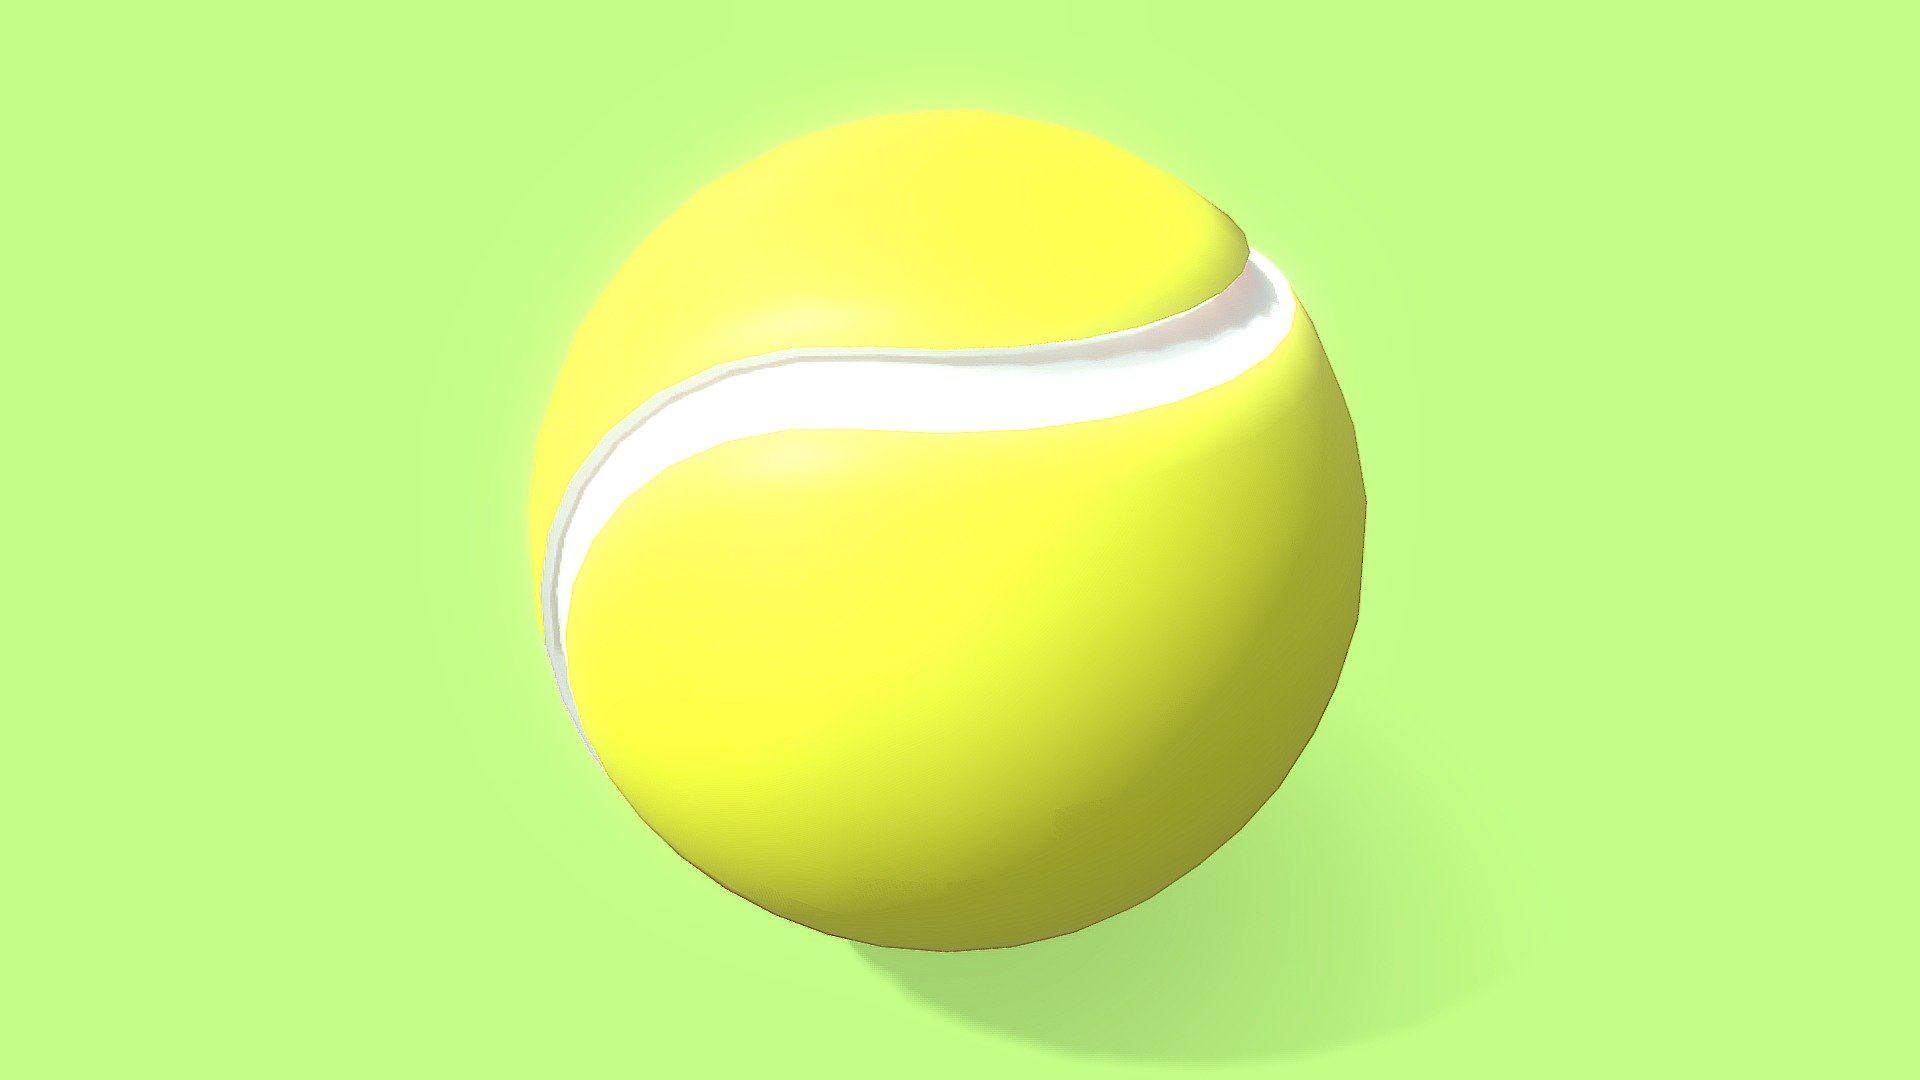 Simple tennis ball
Basic tennis ball, game ready... 3d model